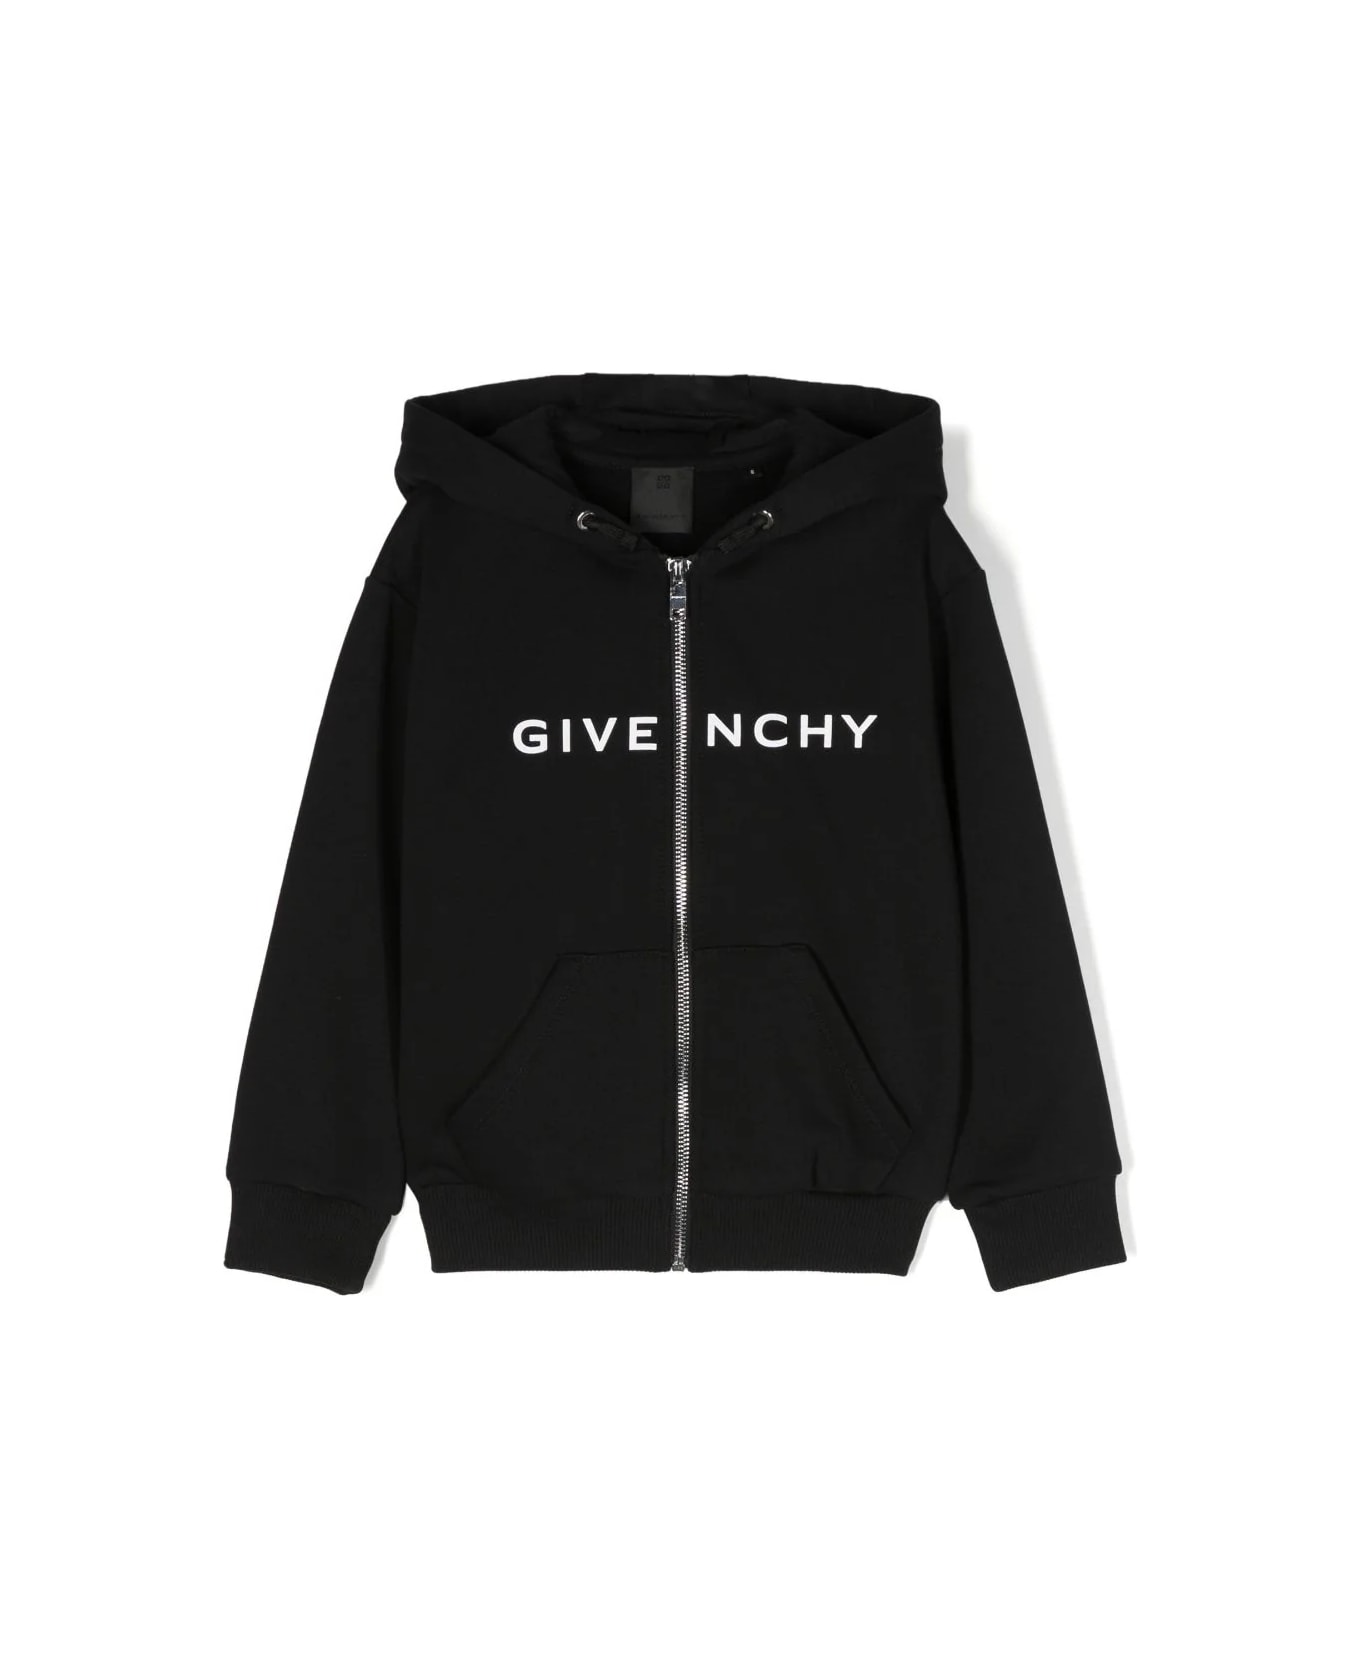 Givenchy Sweatshirt With Print - B Nero